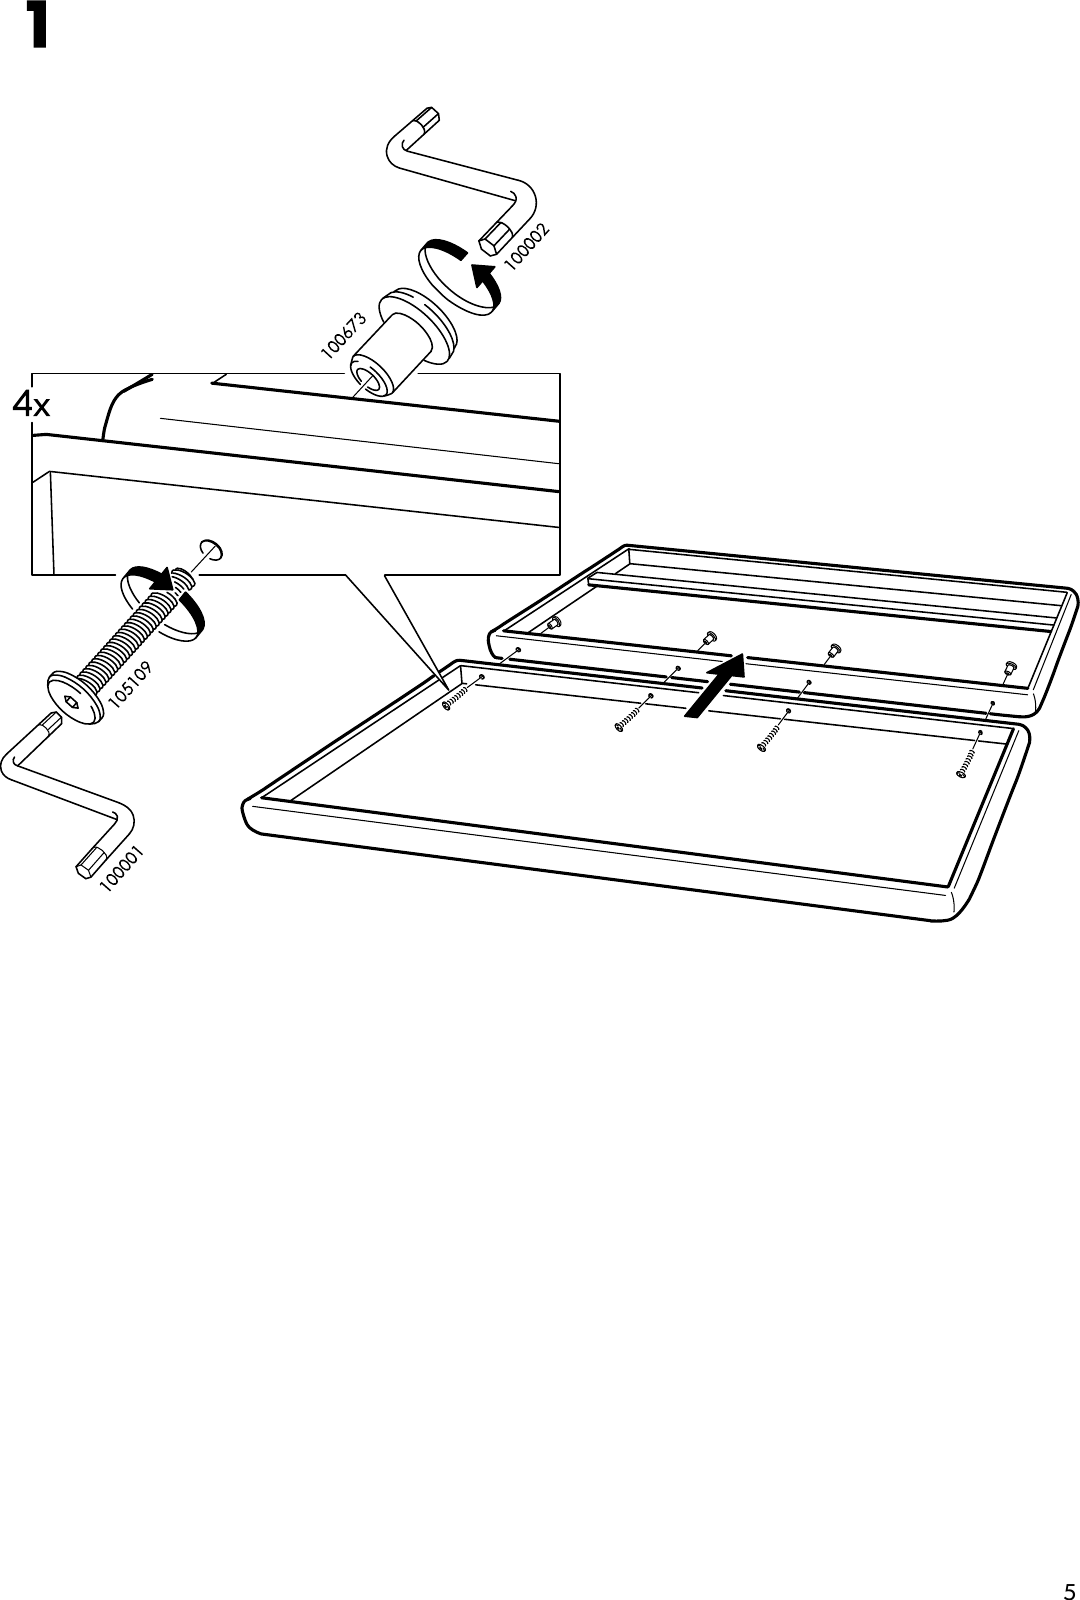 Page 5 of 8 - Ikea Ikea-Badalen-Wall-Mounted-Headboard-Assembly-Instruction